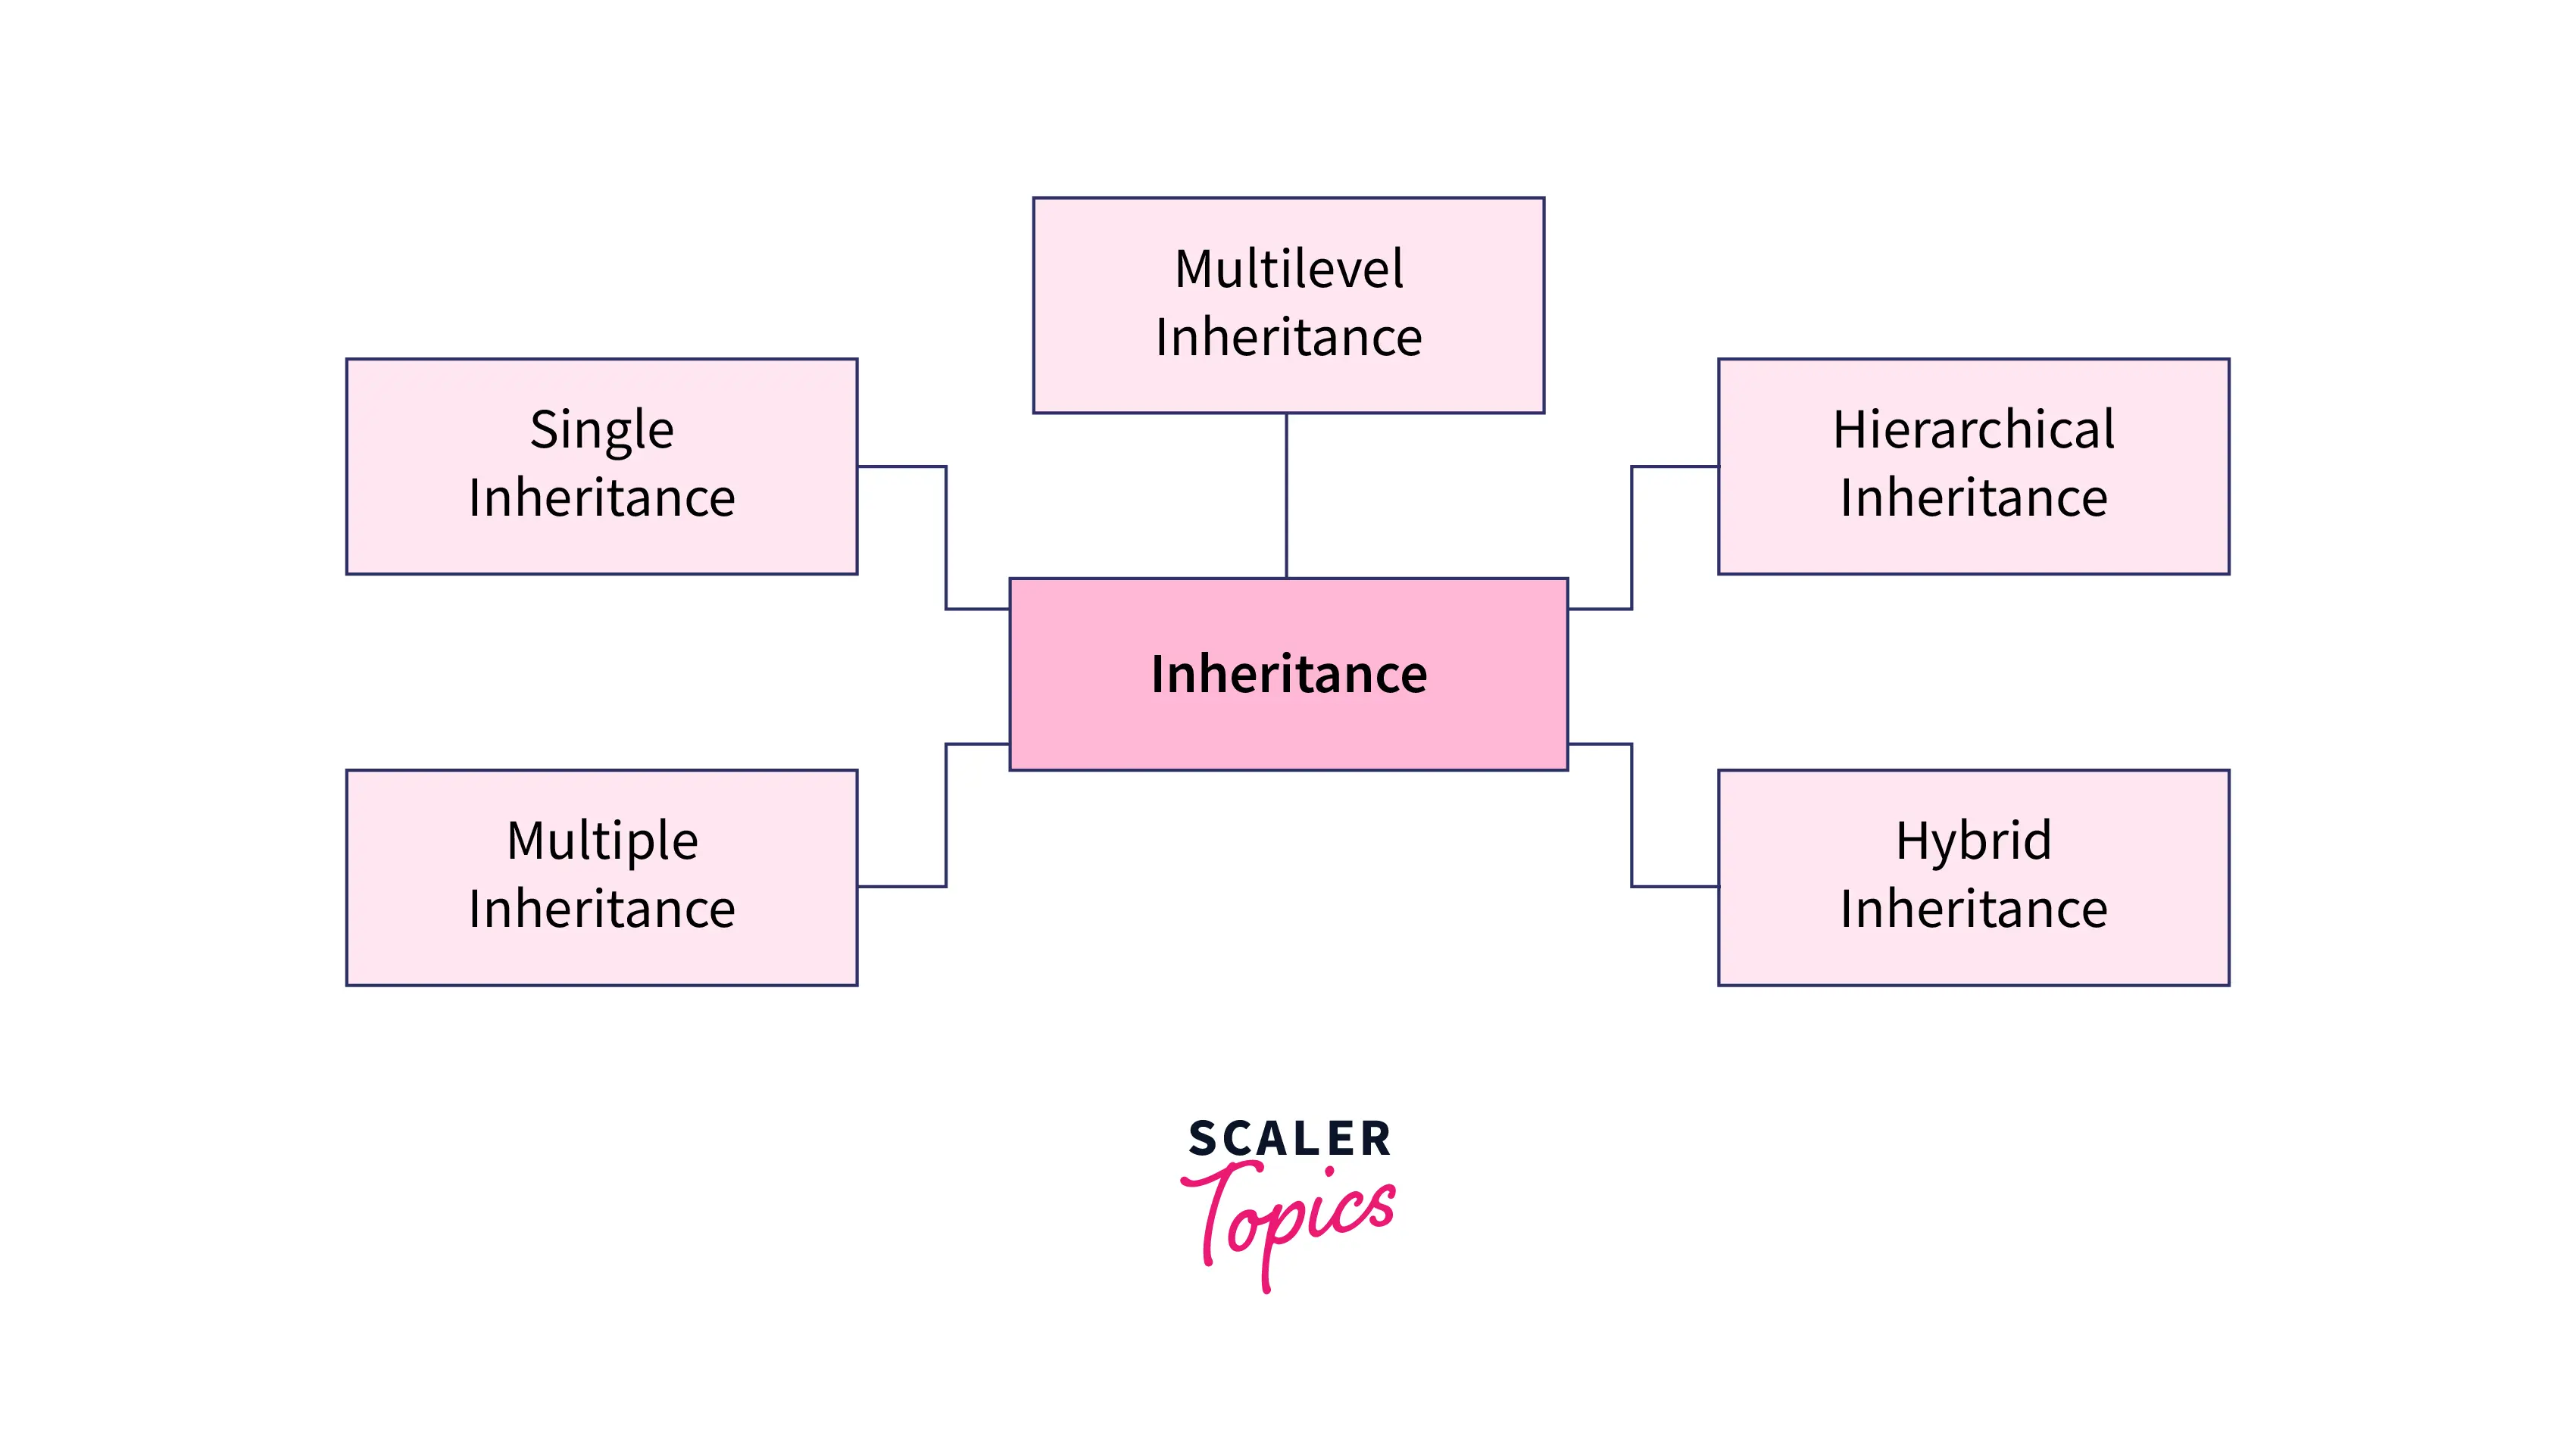 Types of Inheritance